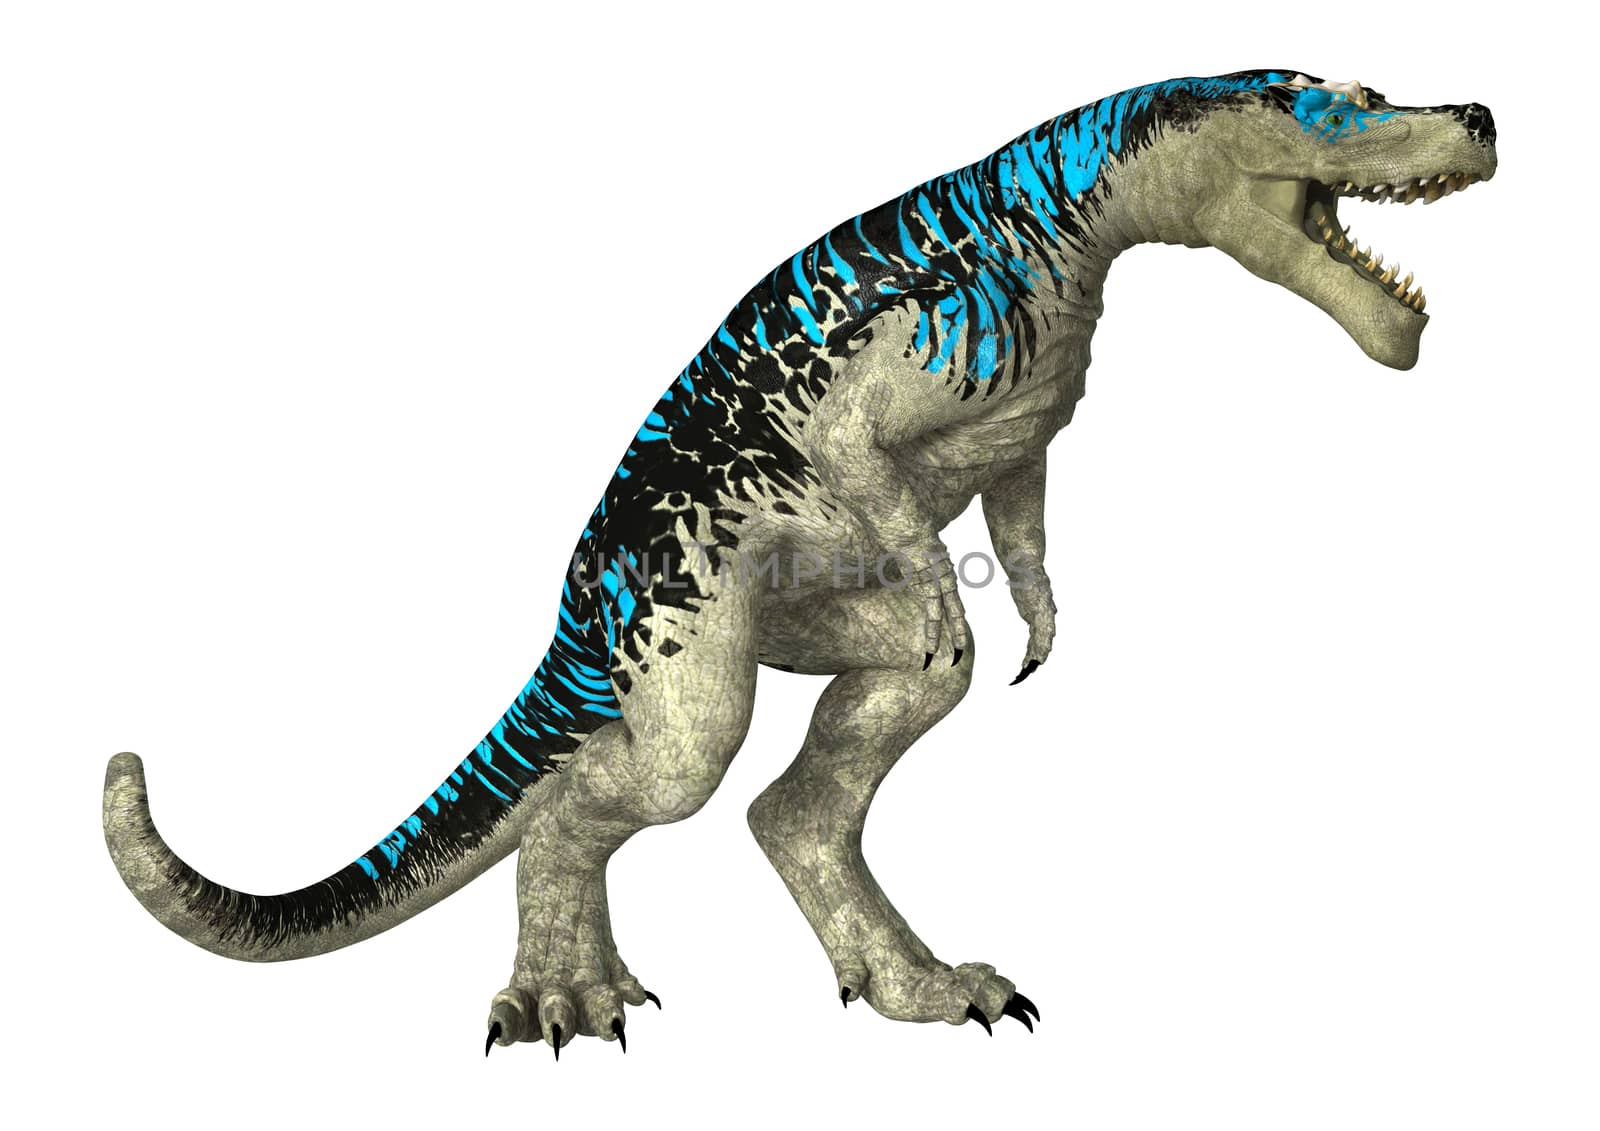 Tyrannosaurus Rex by Vac